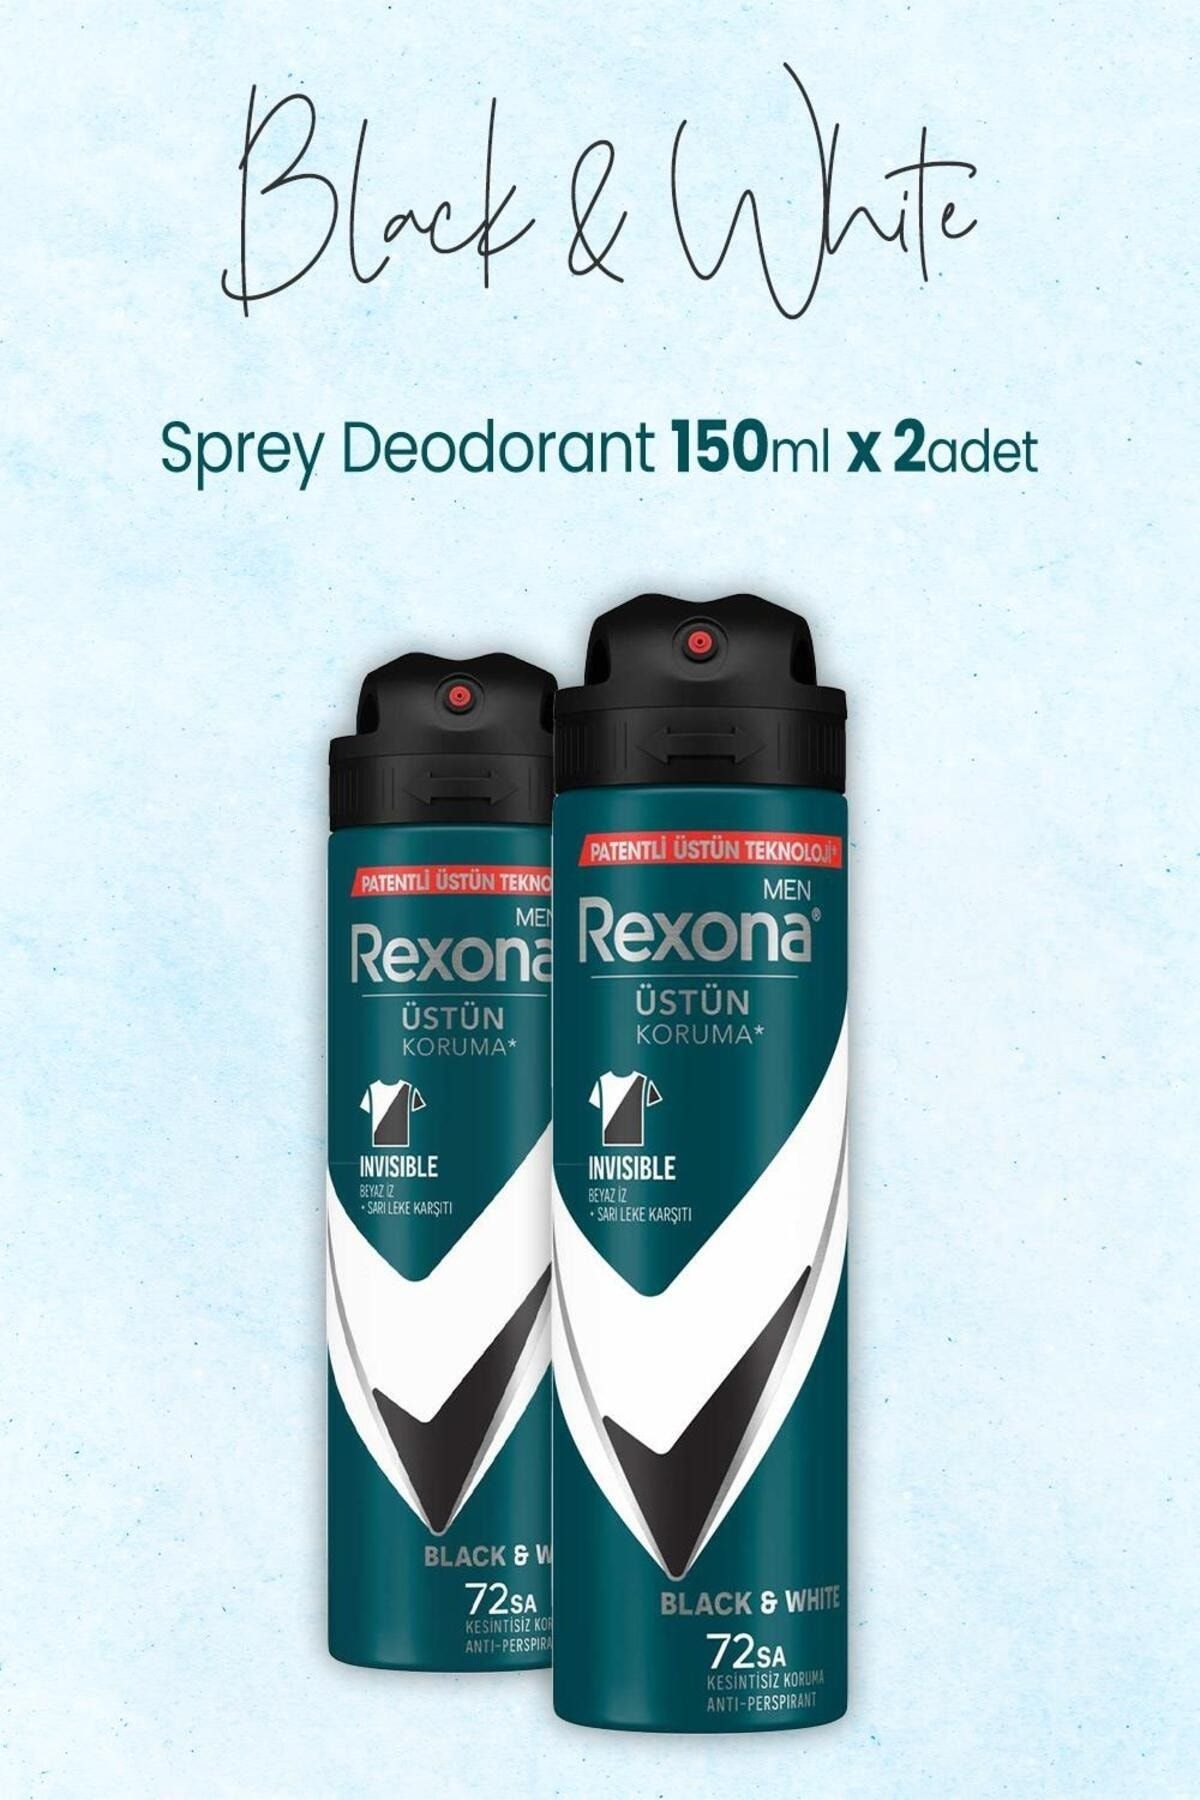 Rexona Men Sprey Deodorant Black White 150 ml x 2 Adet